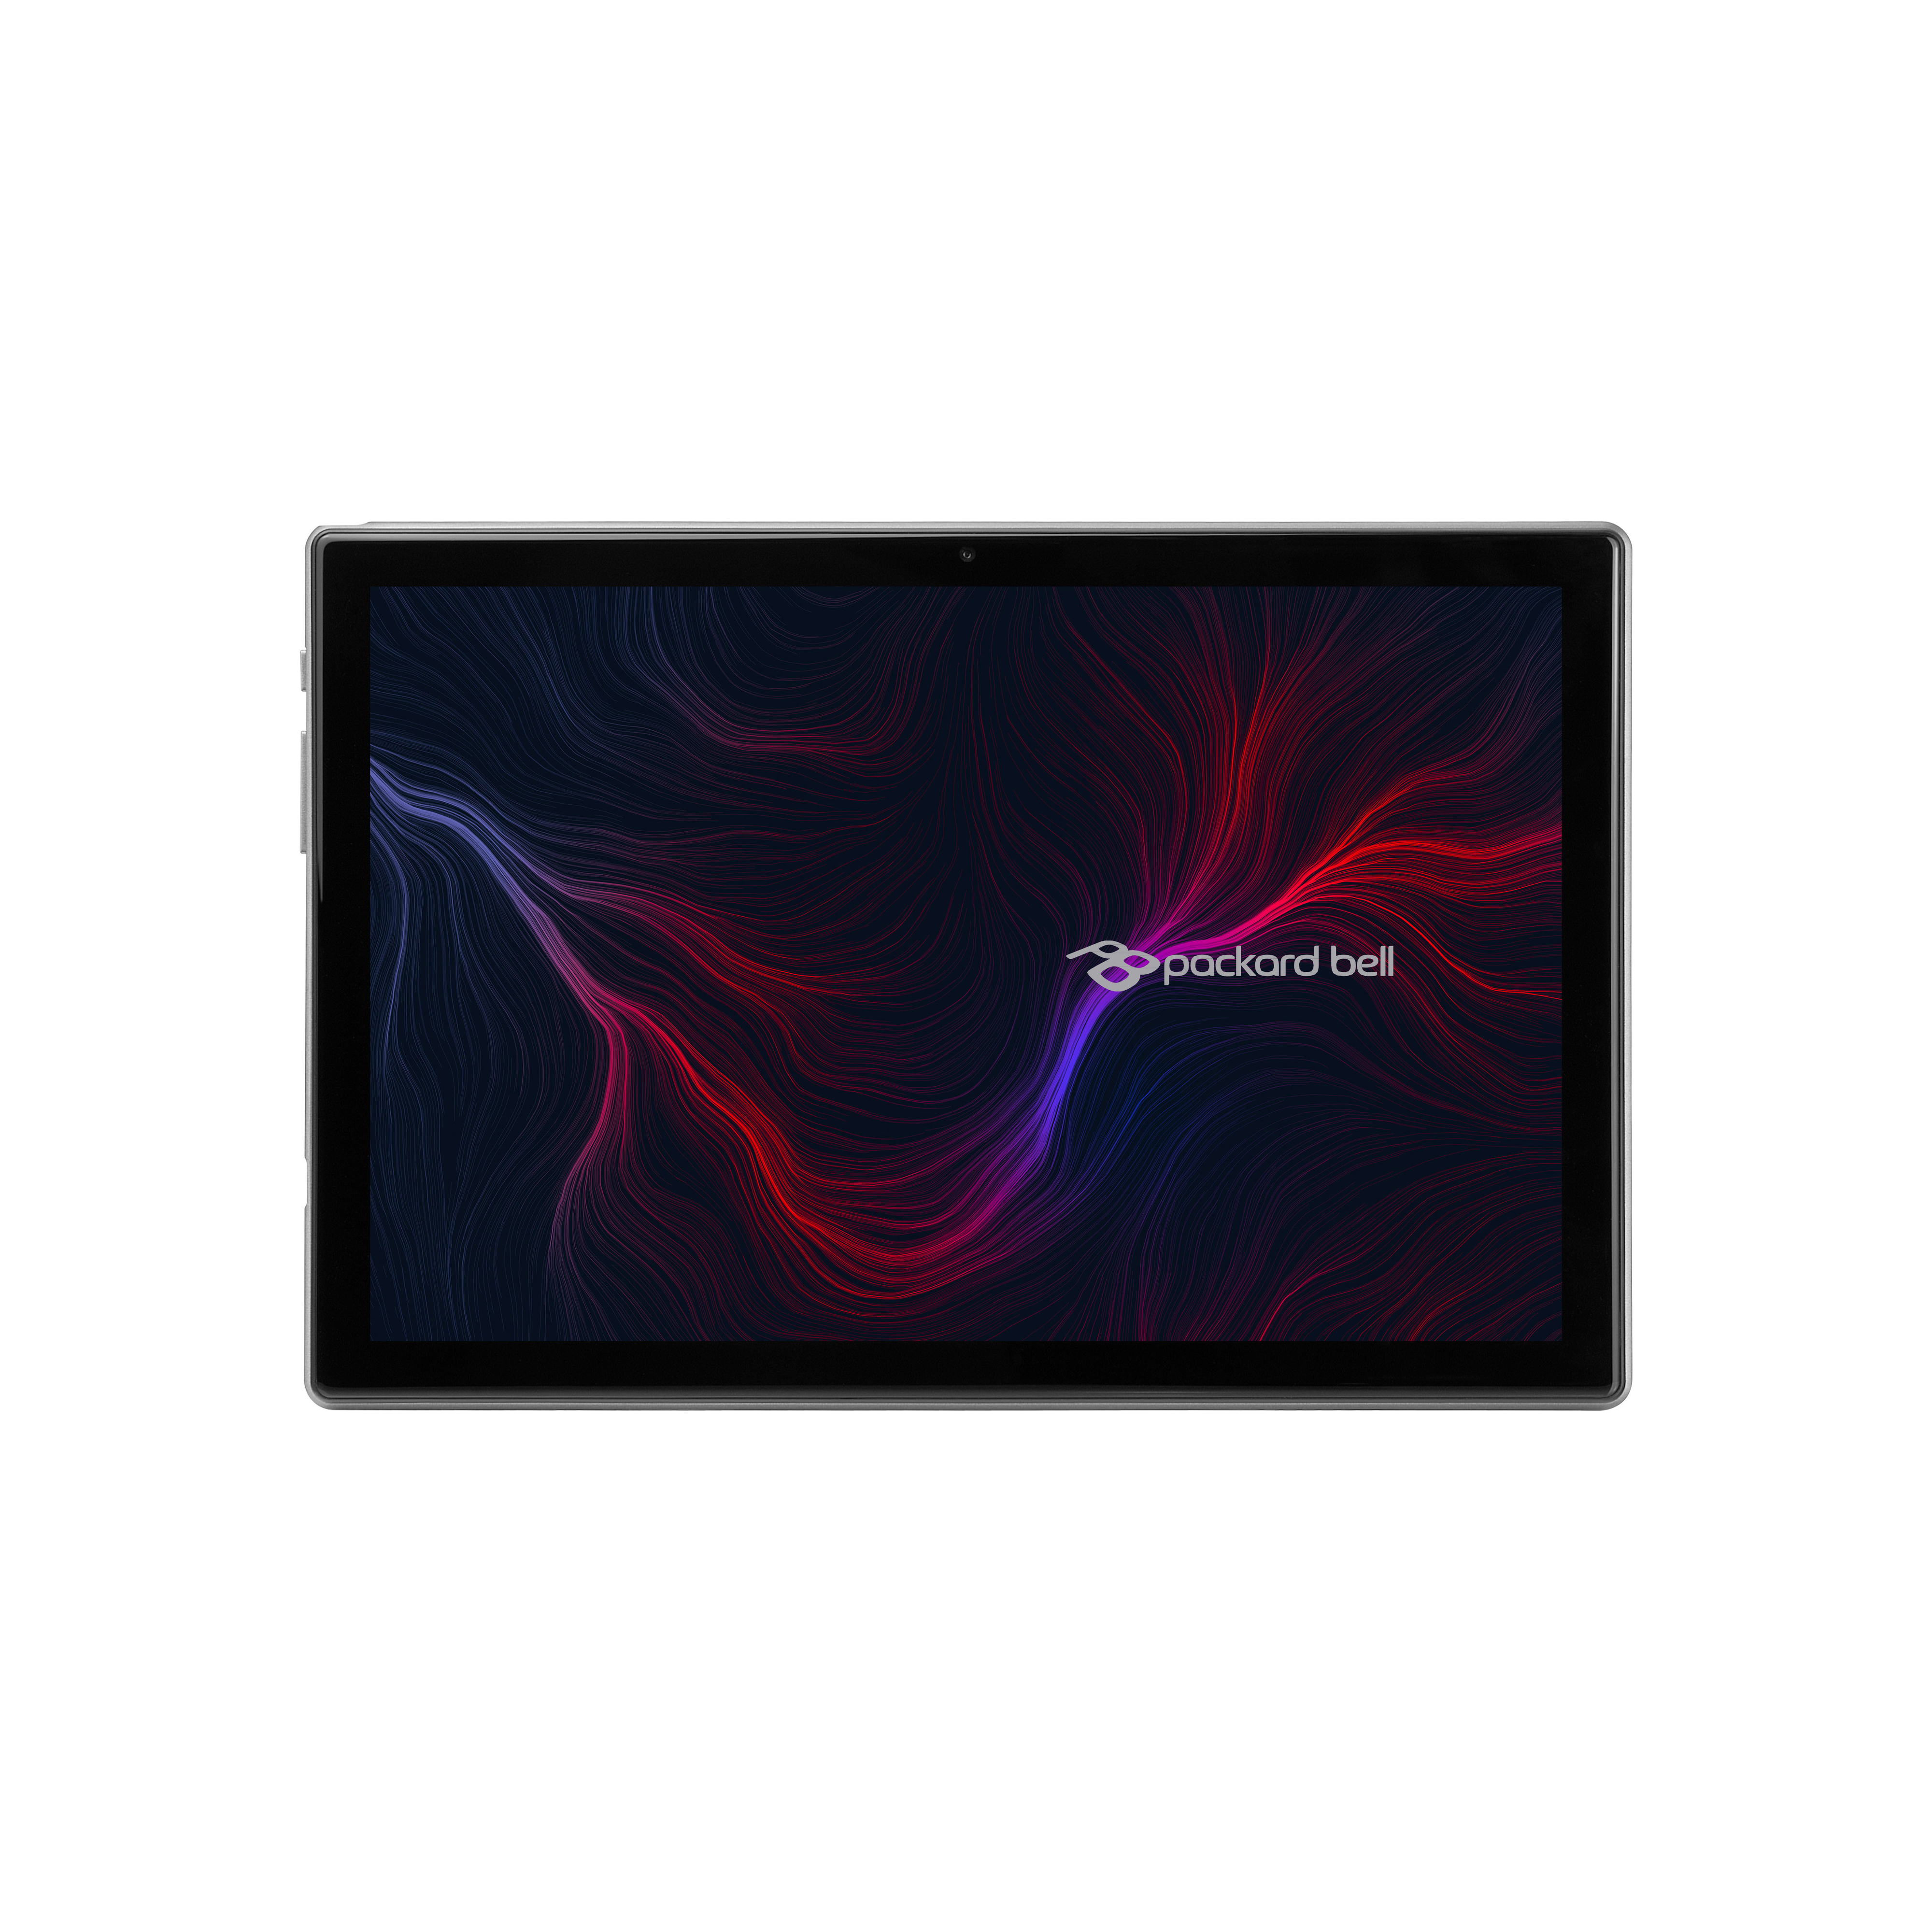 Packard Bell Silverstone T10 10.1 inch Full HD 64GB LTE Tablet